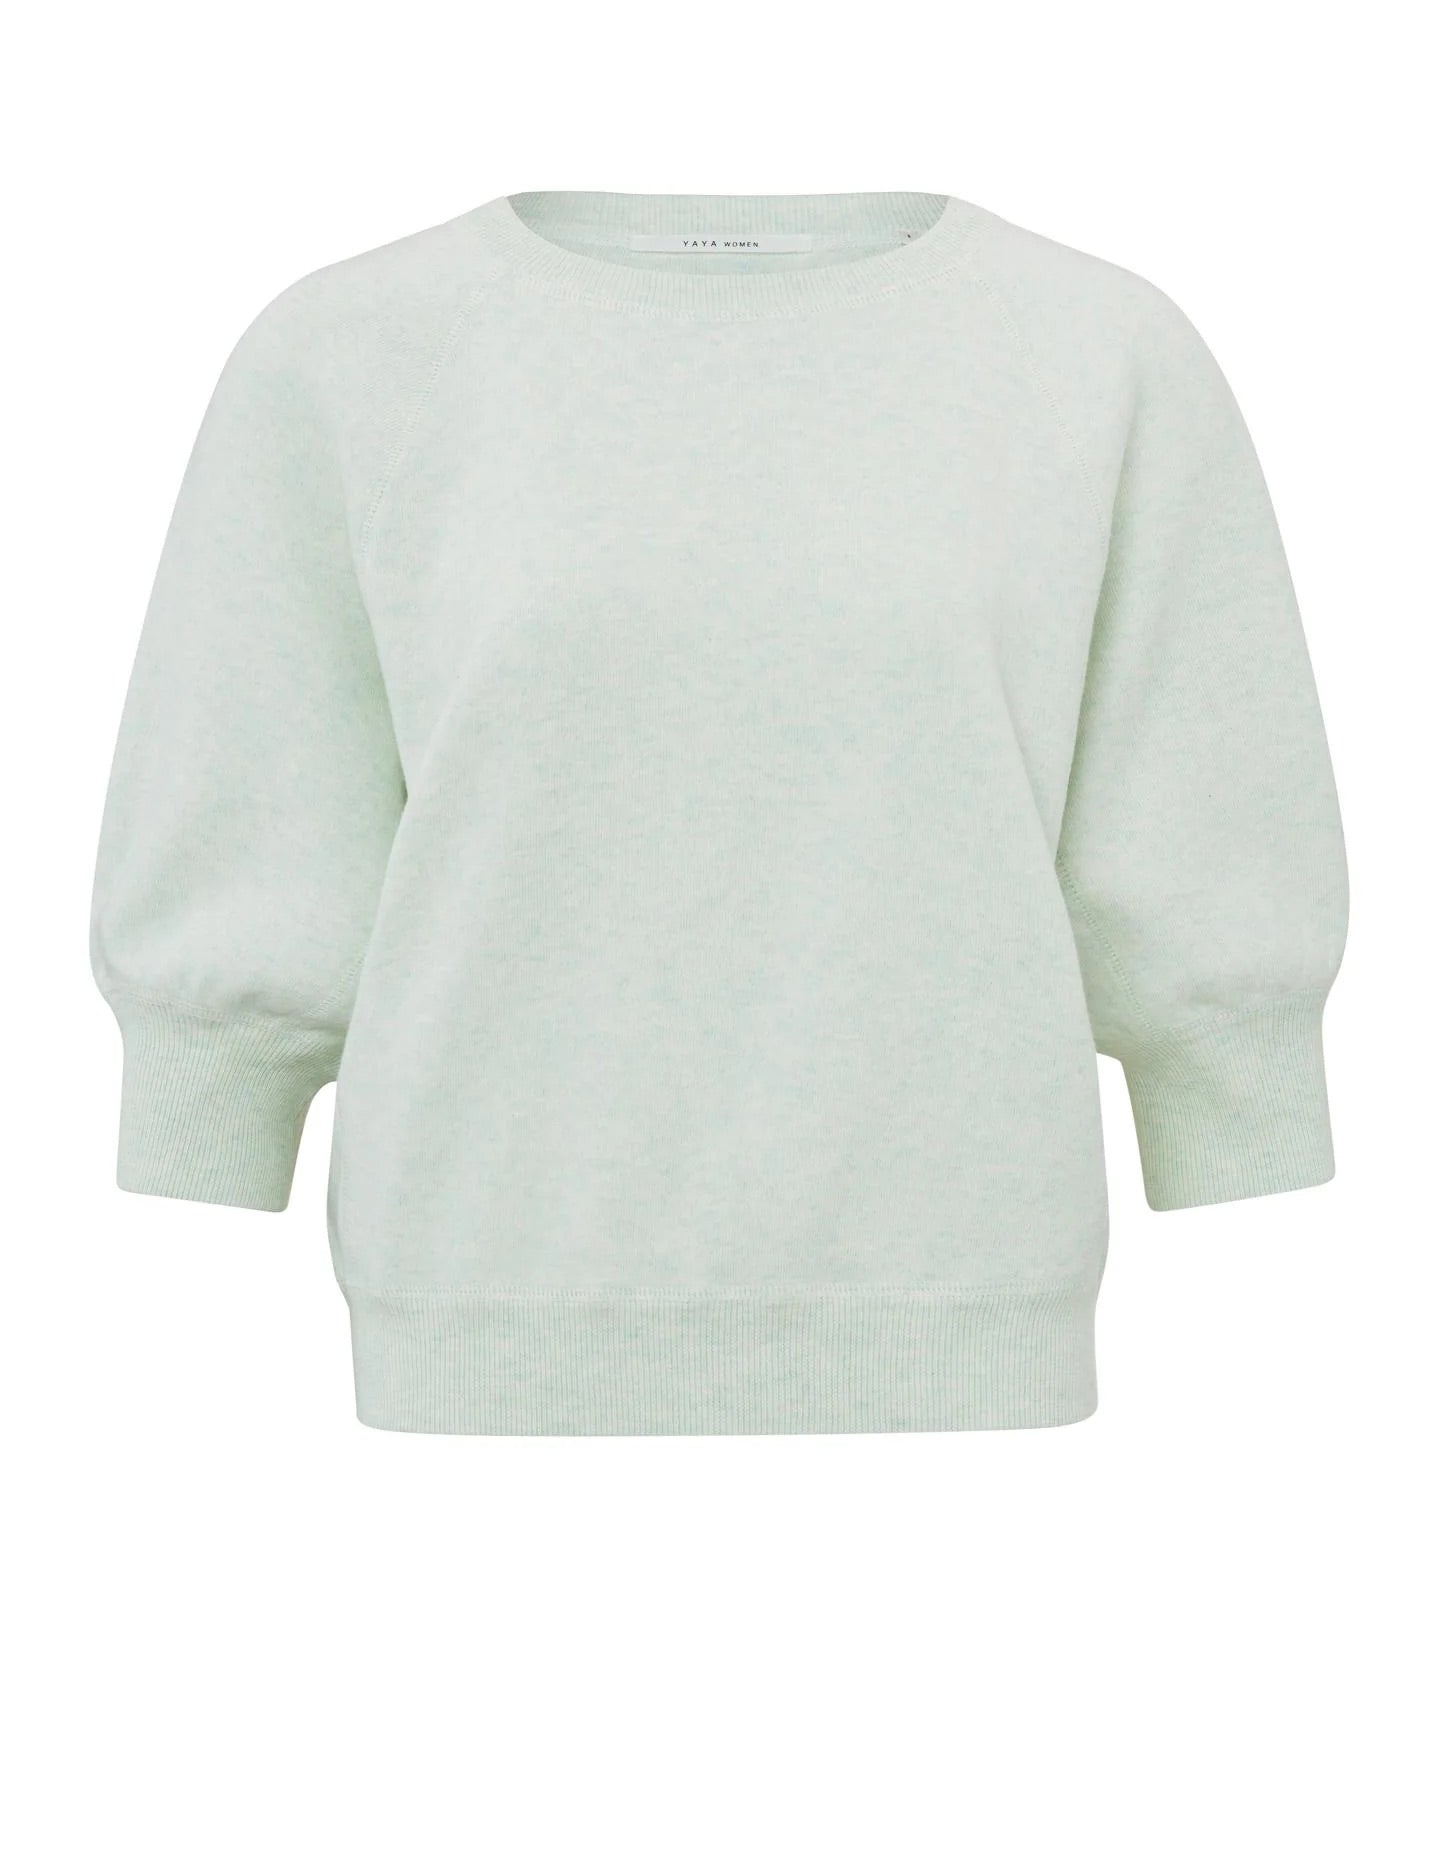 sweater-with-round-neck-and-half-long-raglan-sleeves-hint-of-mint-green-melange_2880x_jpg.jpg